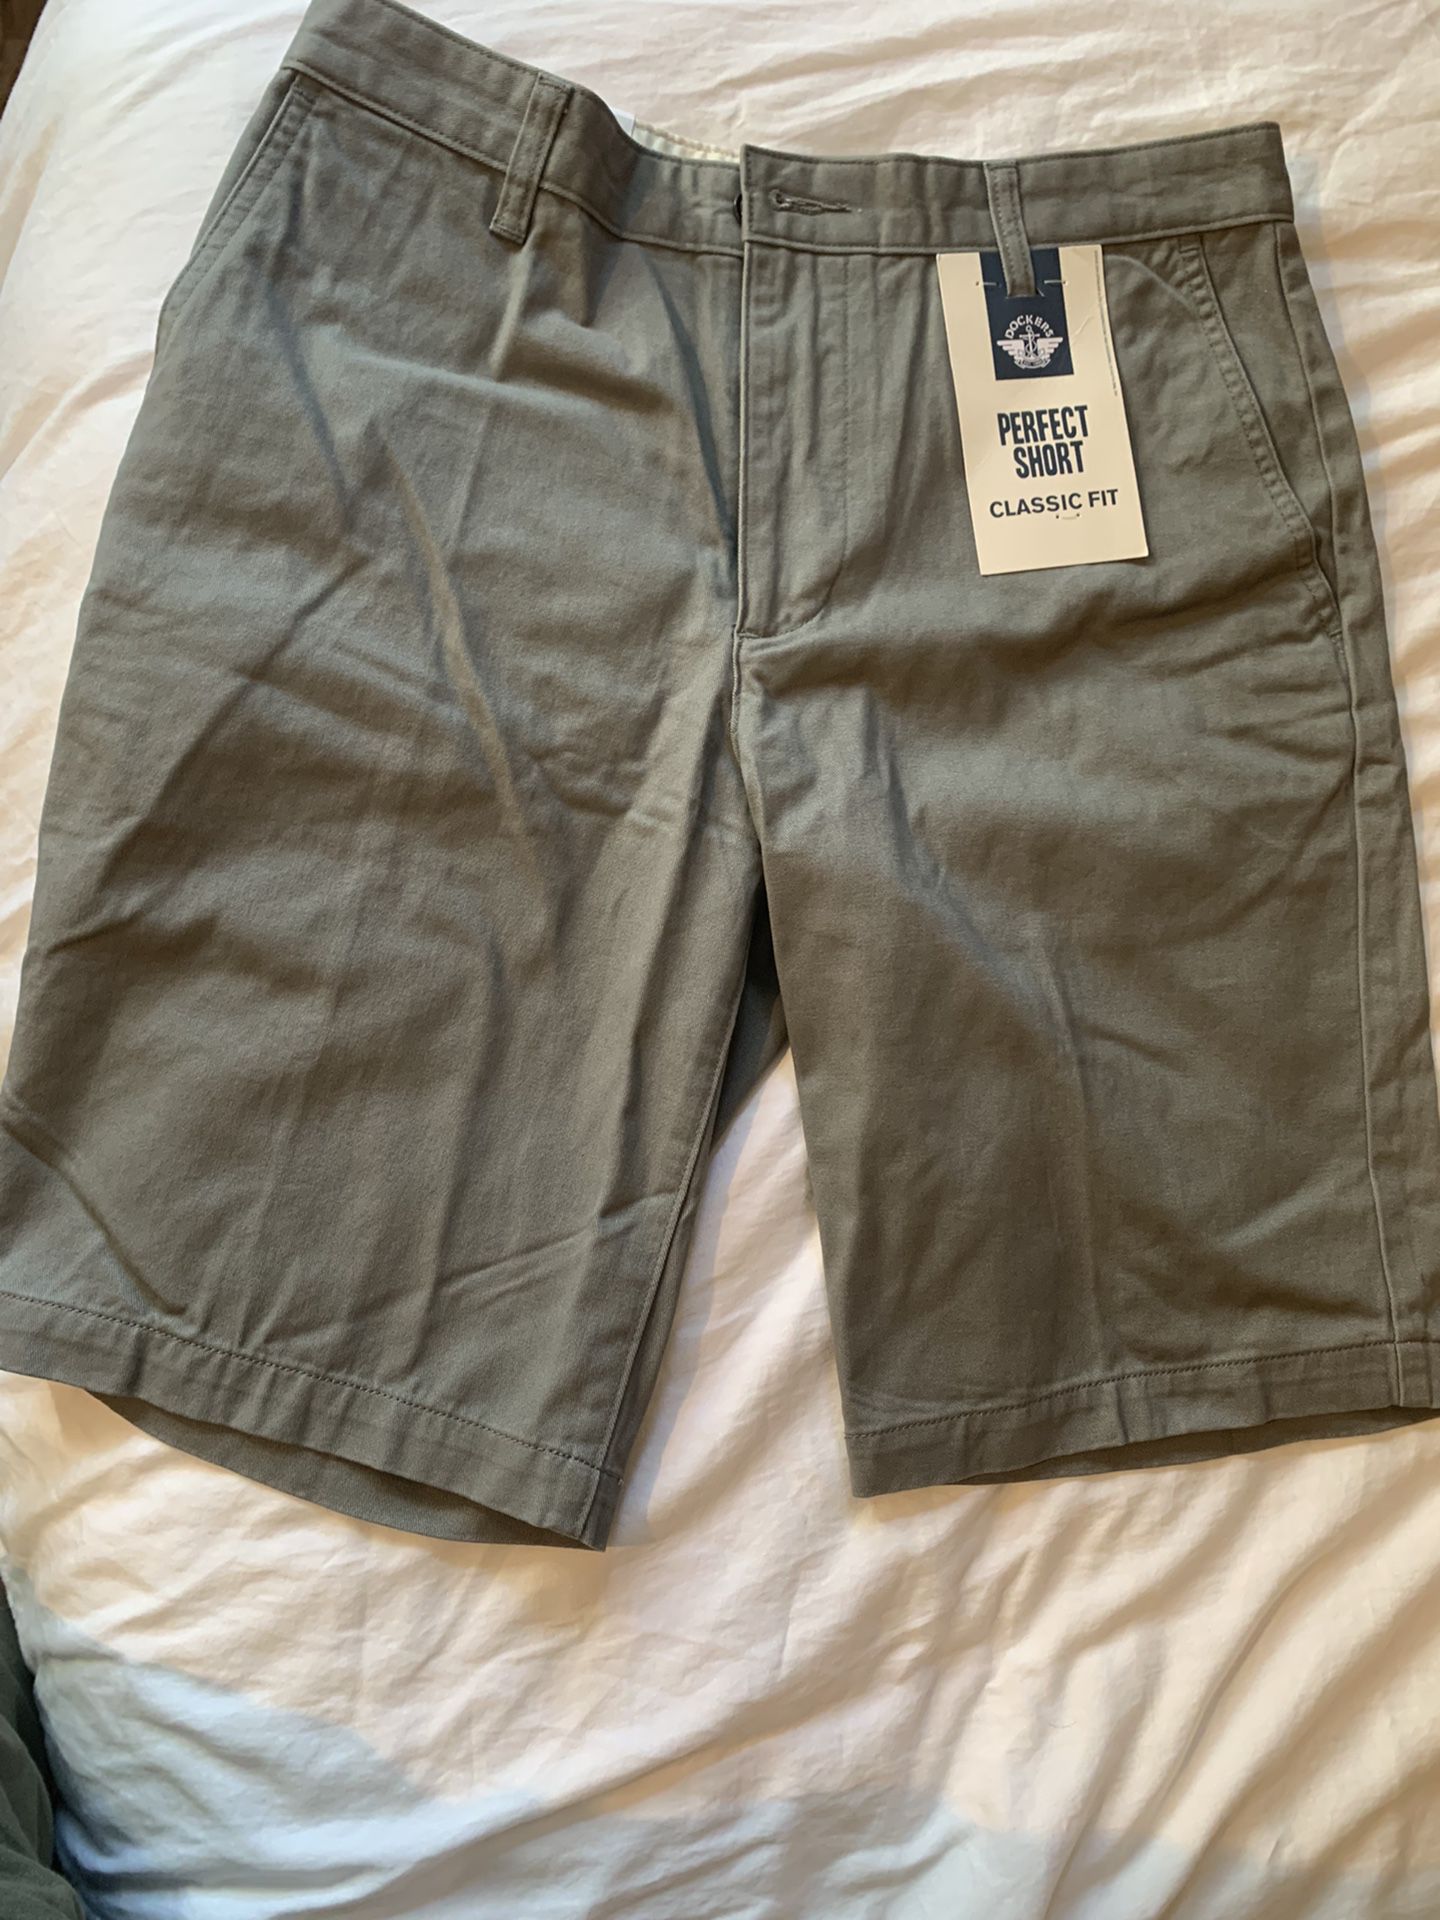 Dockers Shorts - Size 30